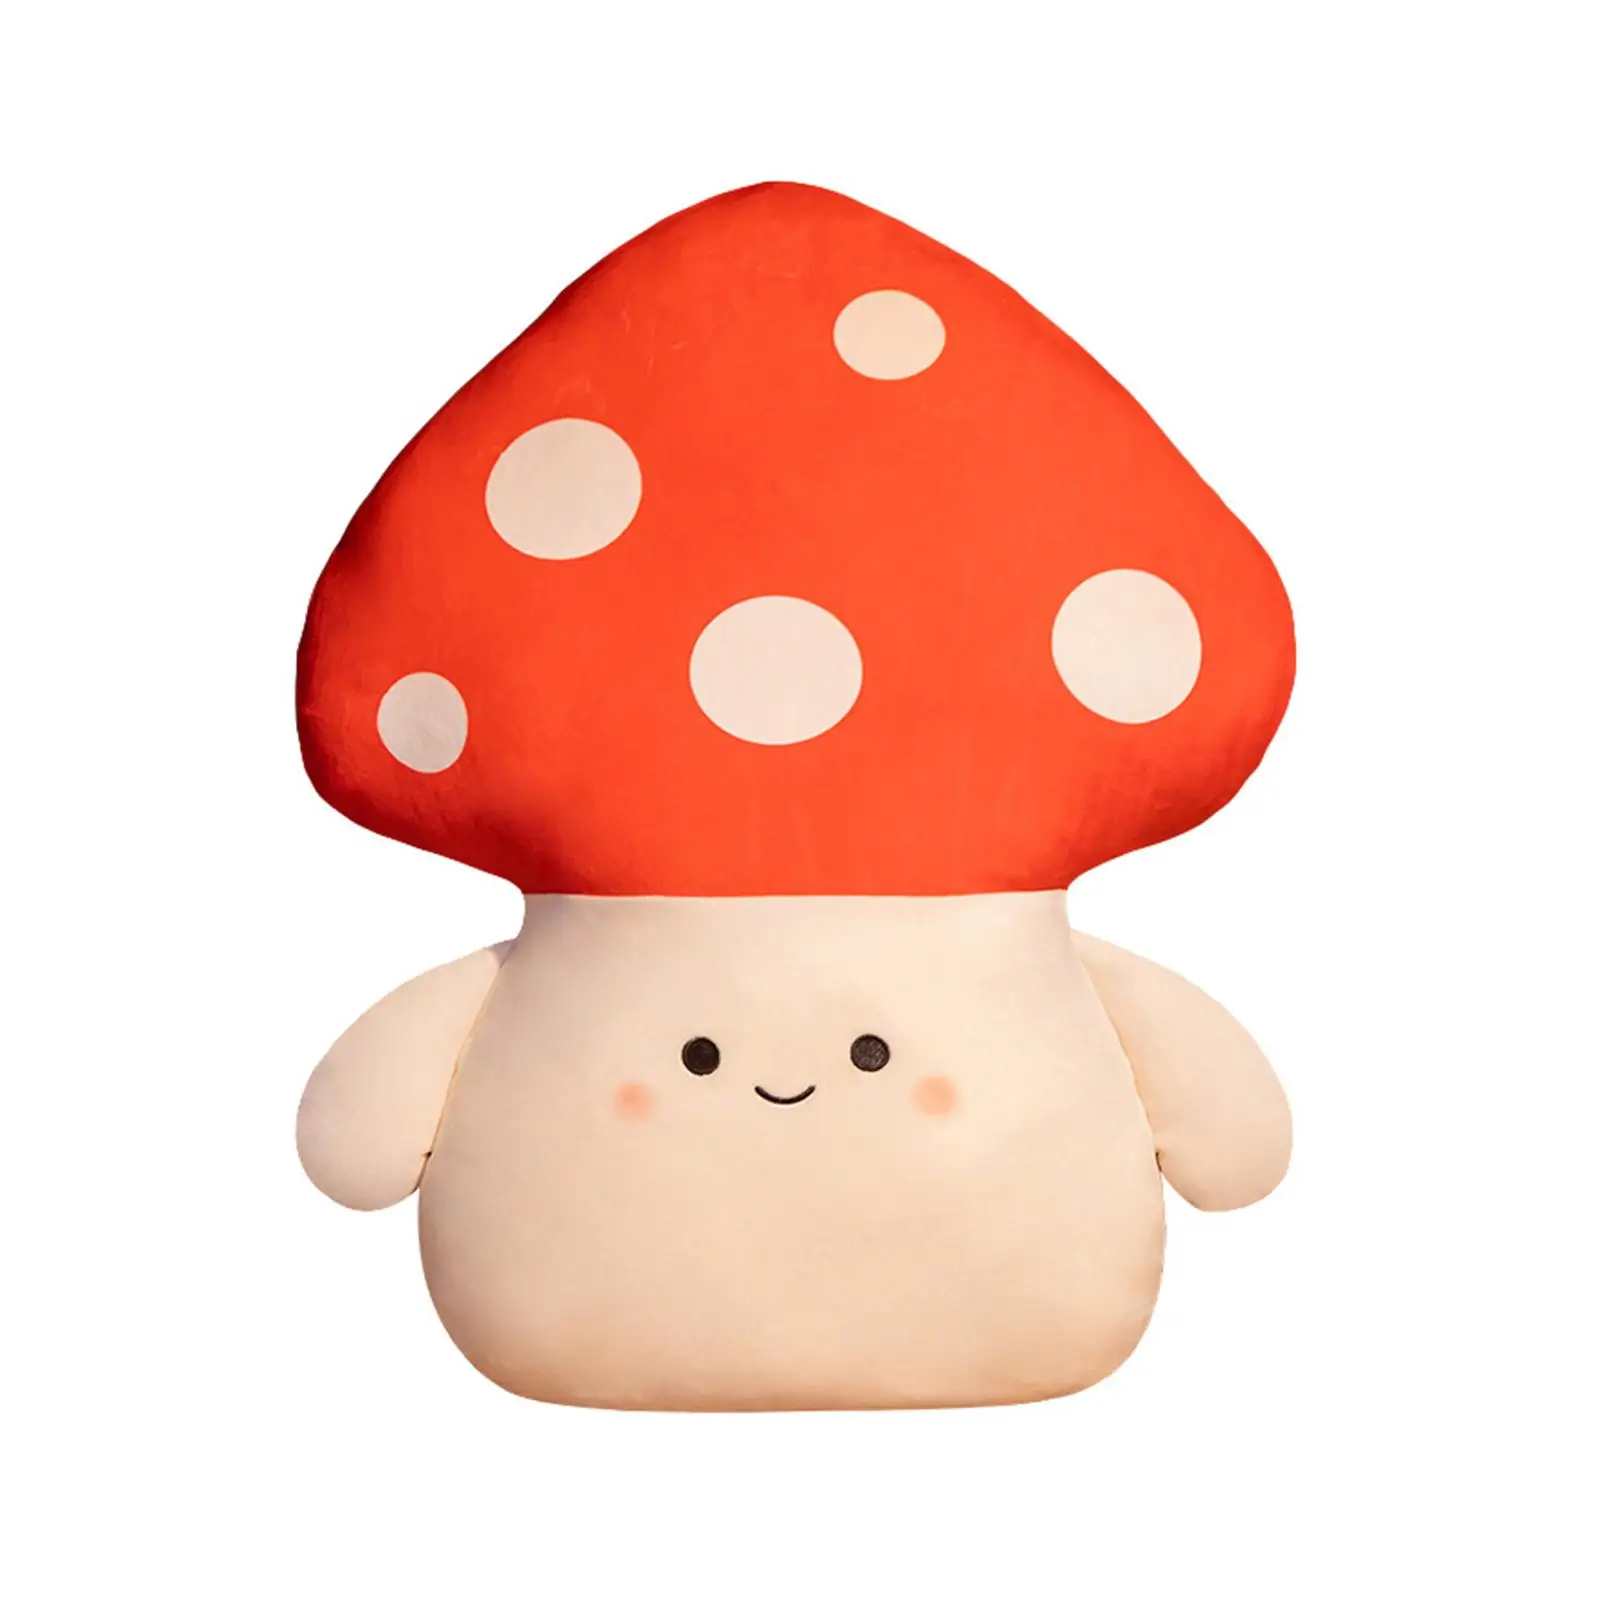 Cute Plush Mushroom Toy Stuffed Mushroom Plush Toy Ornament Soft Throw Pillow for Living Room Bedroom Decor Housewarming Gift